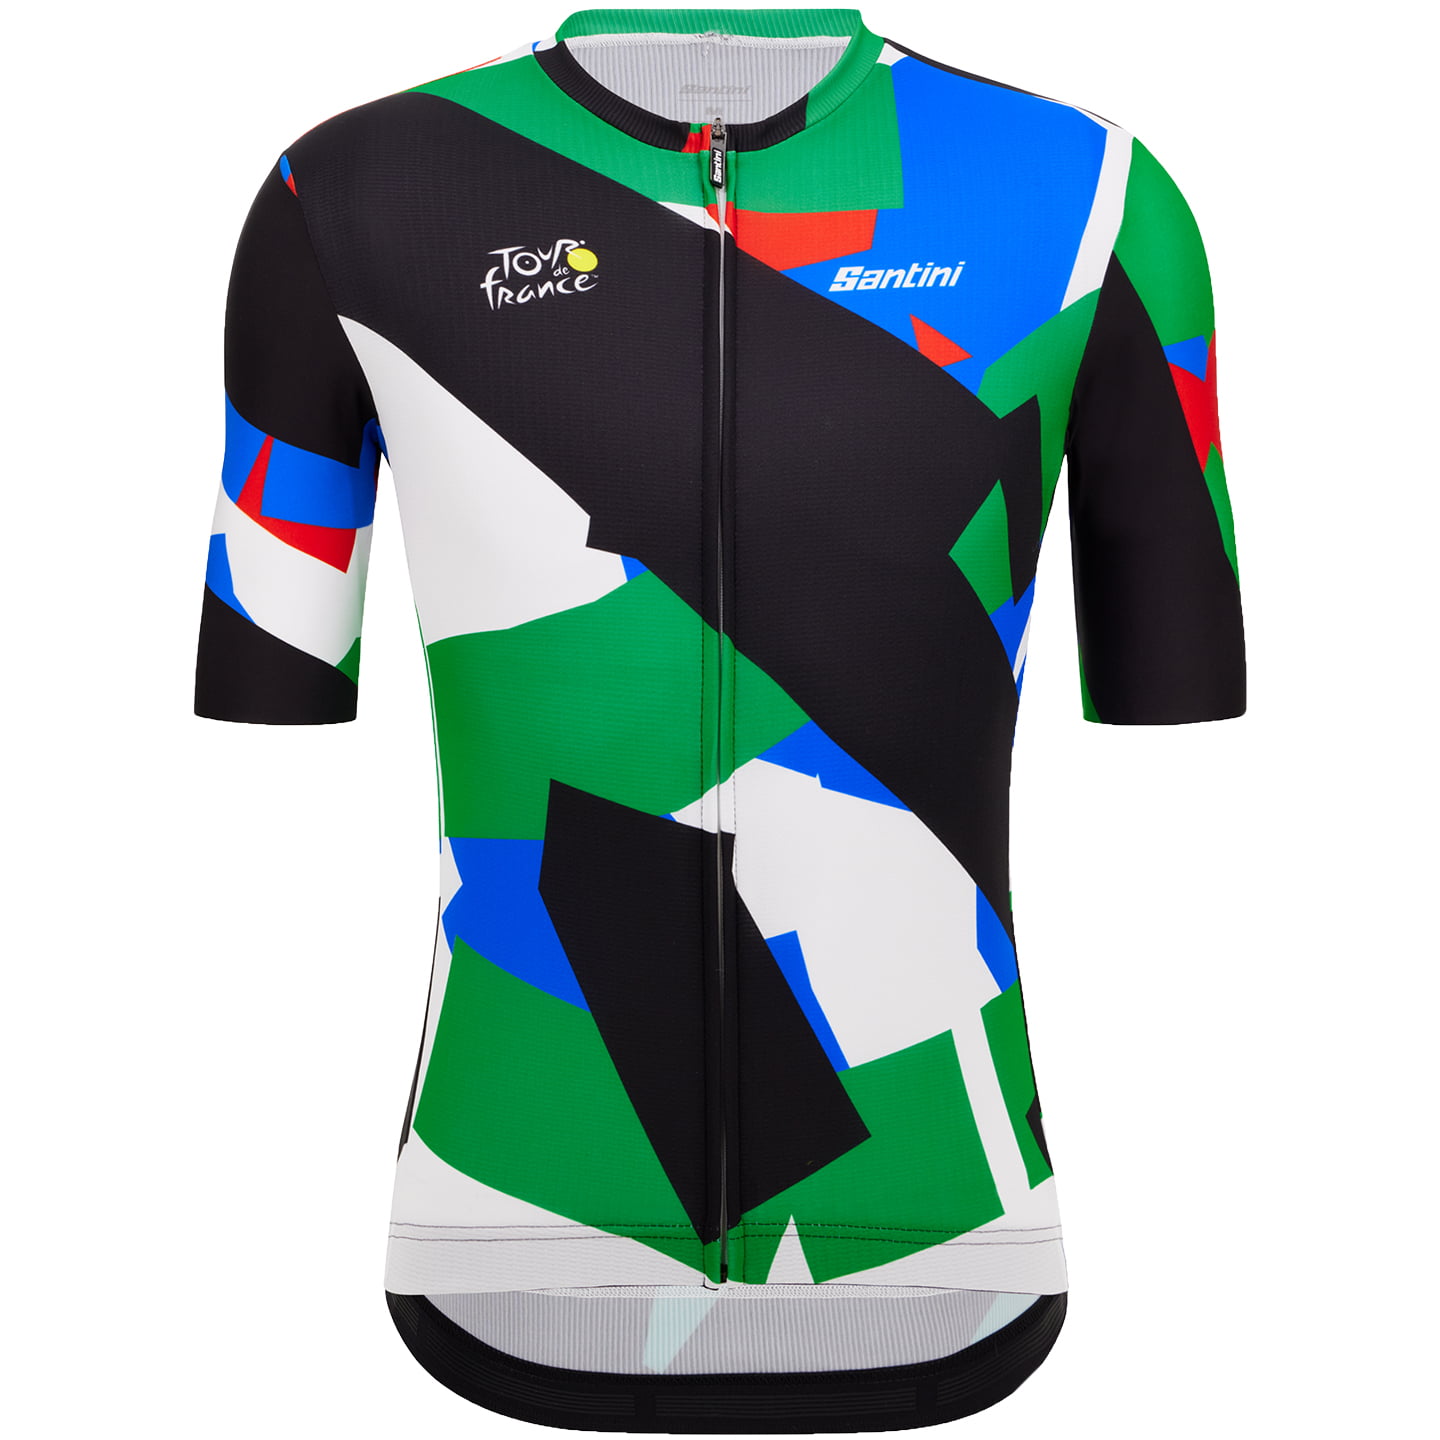 TOUR DE FRANCE Mont Blanc-Courchevel 2023 Short Sleeve Jersey, for men, size L, Cycling shirt, Cycle clothing